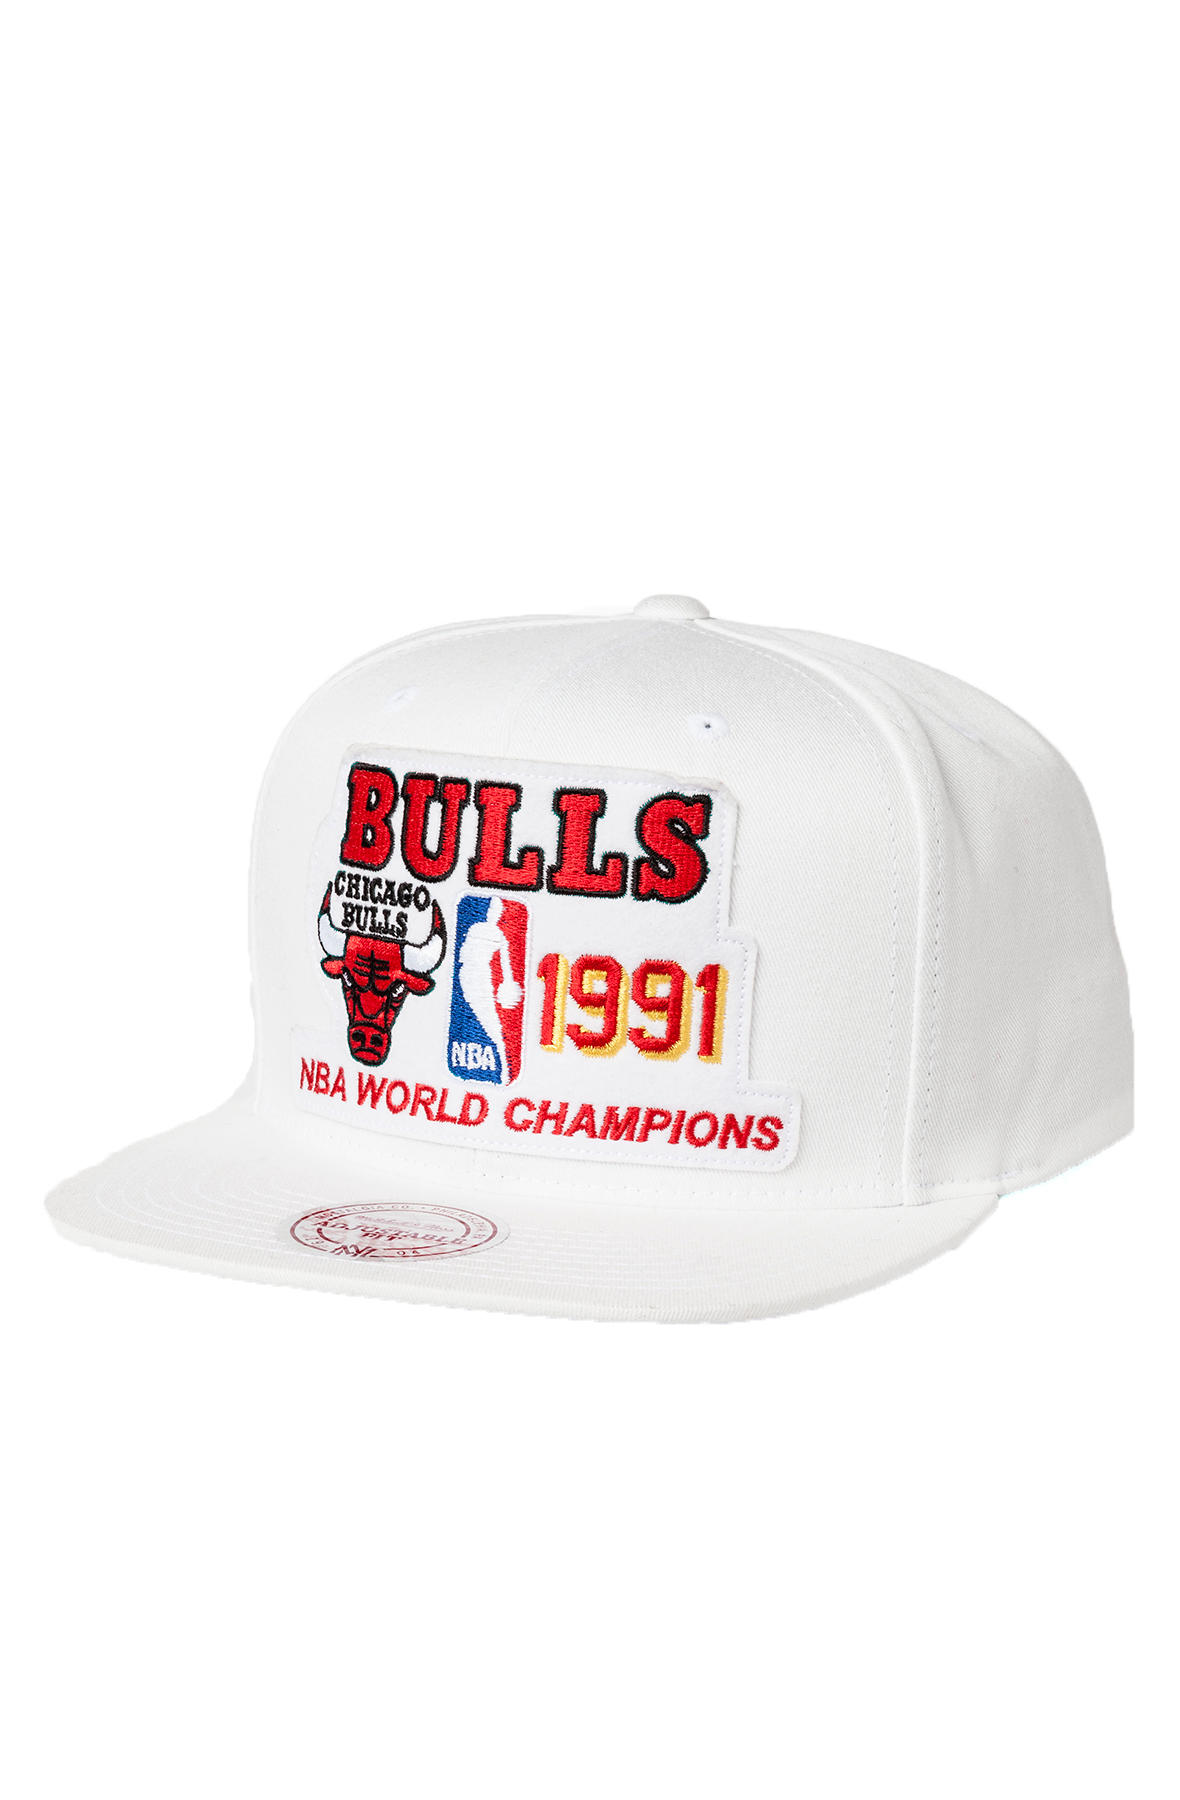 1991 chicago bulls championship hat